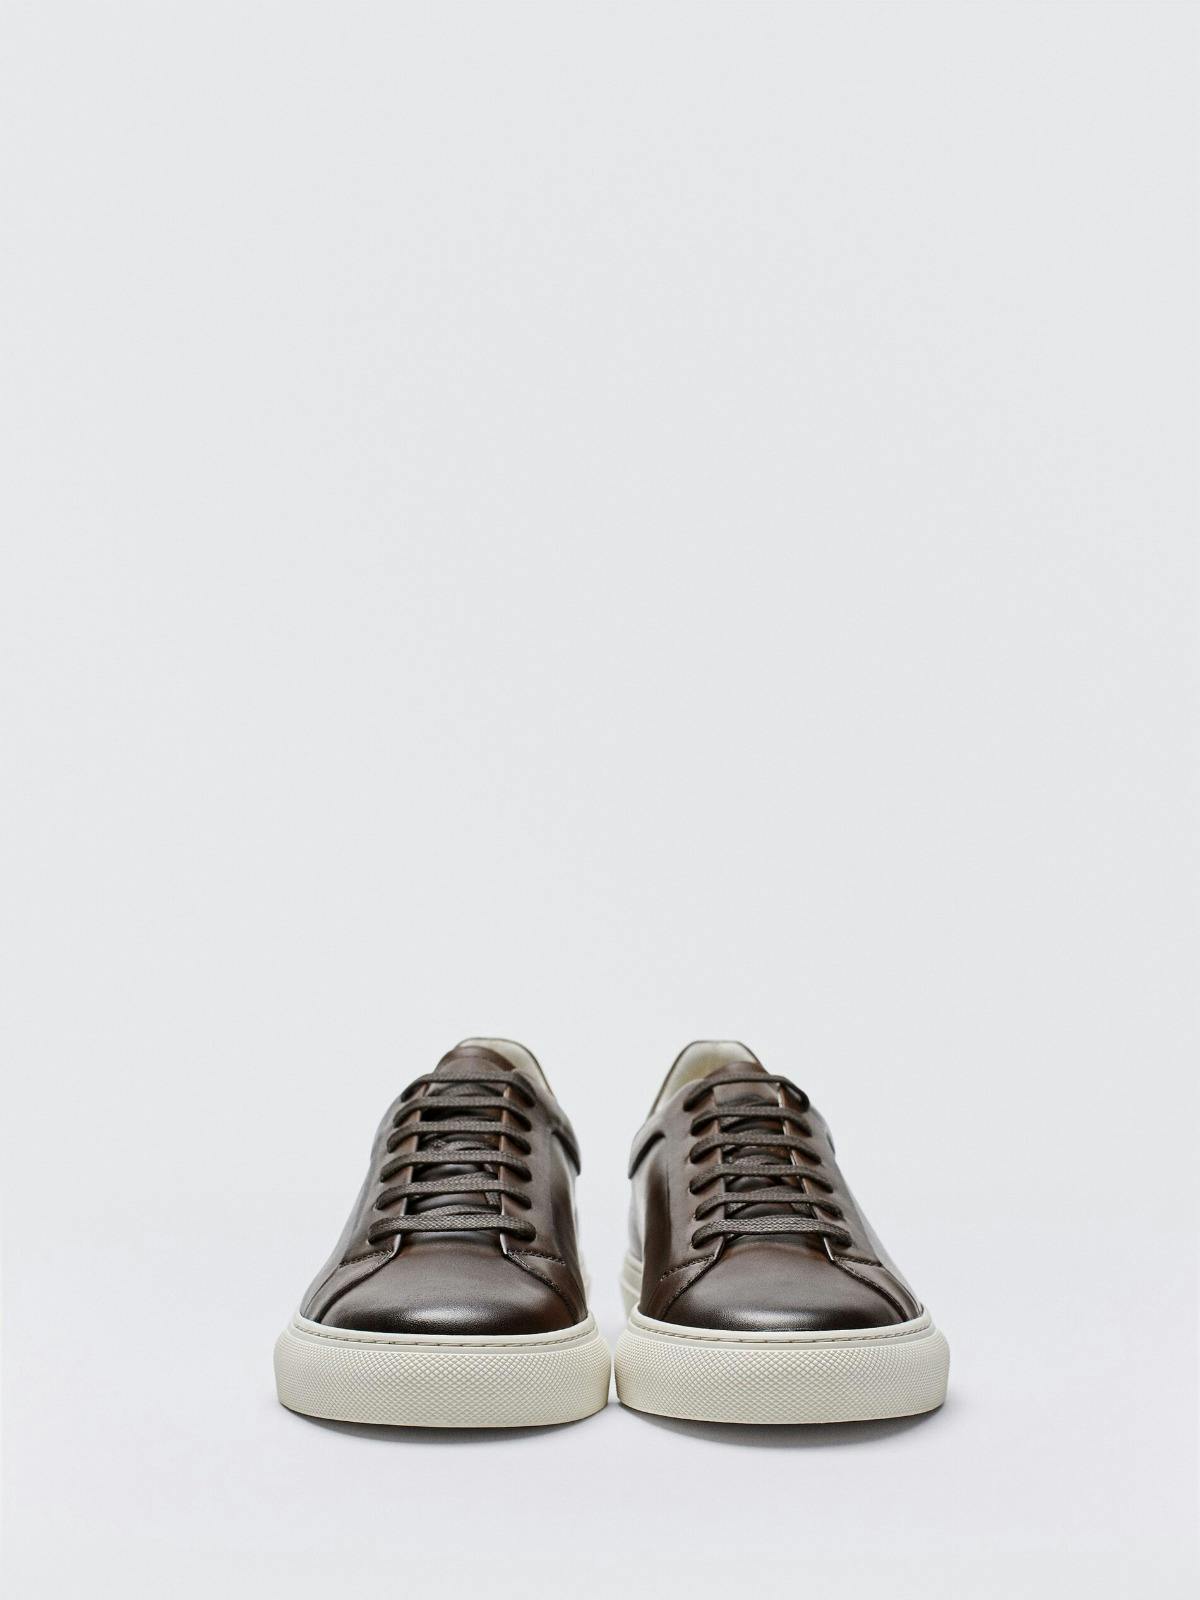 Massimo Dutti Tan Nappa Brushed Leather Sneakers